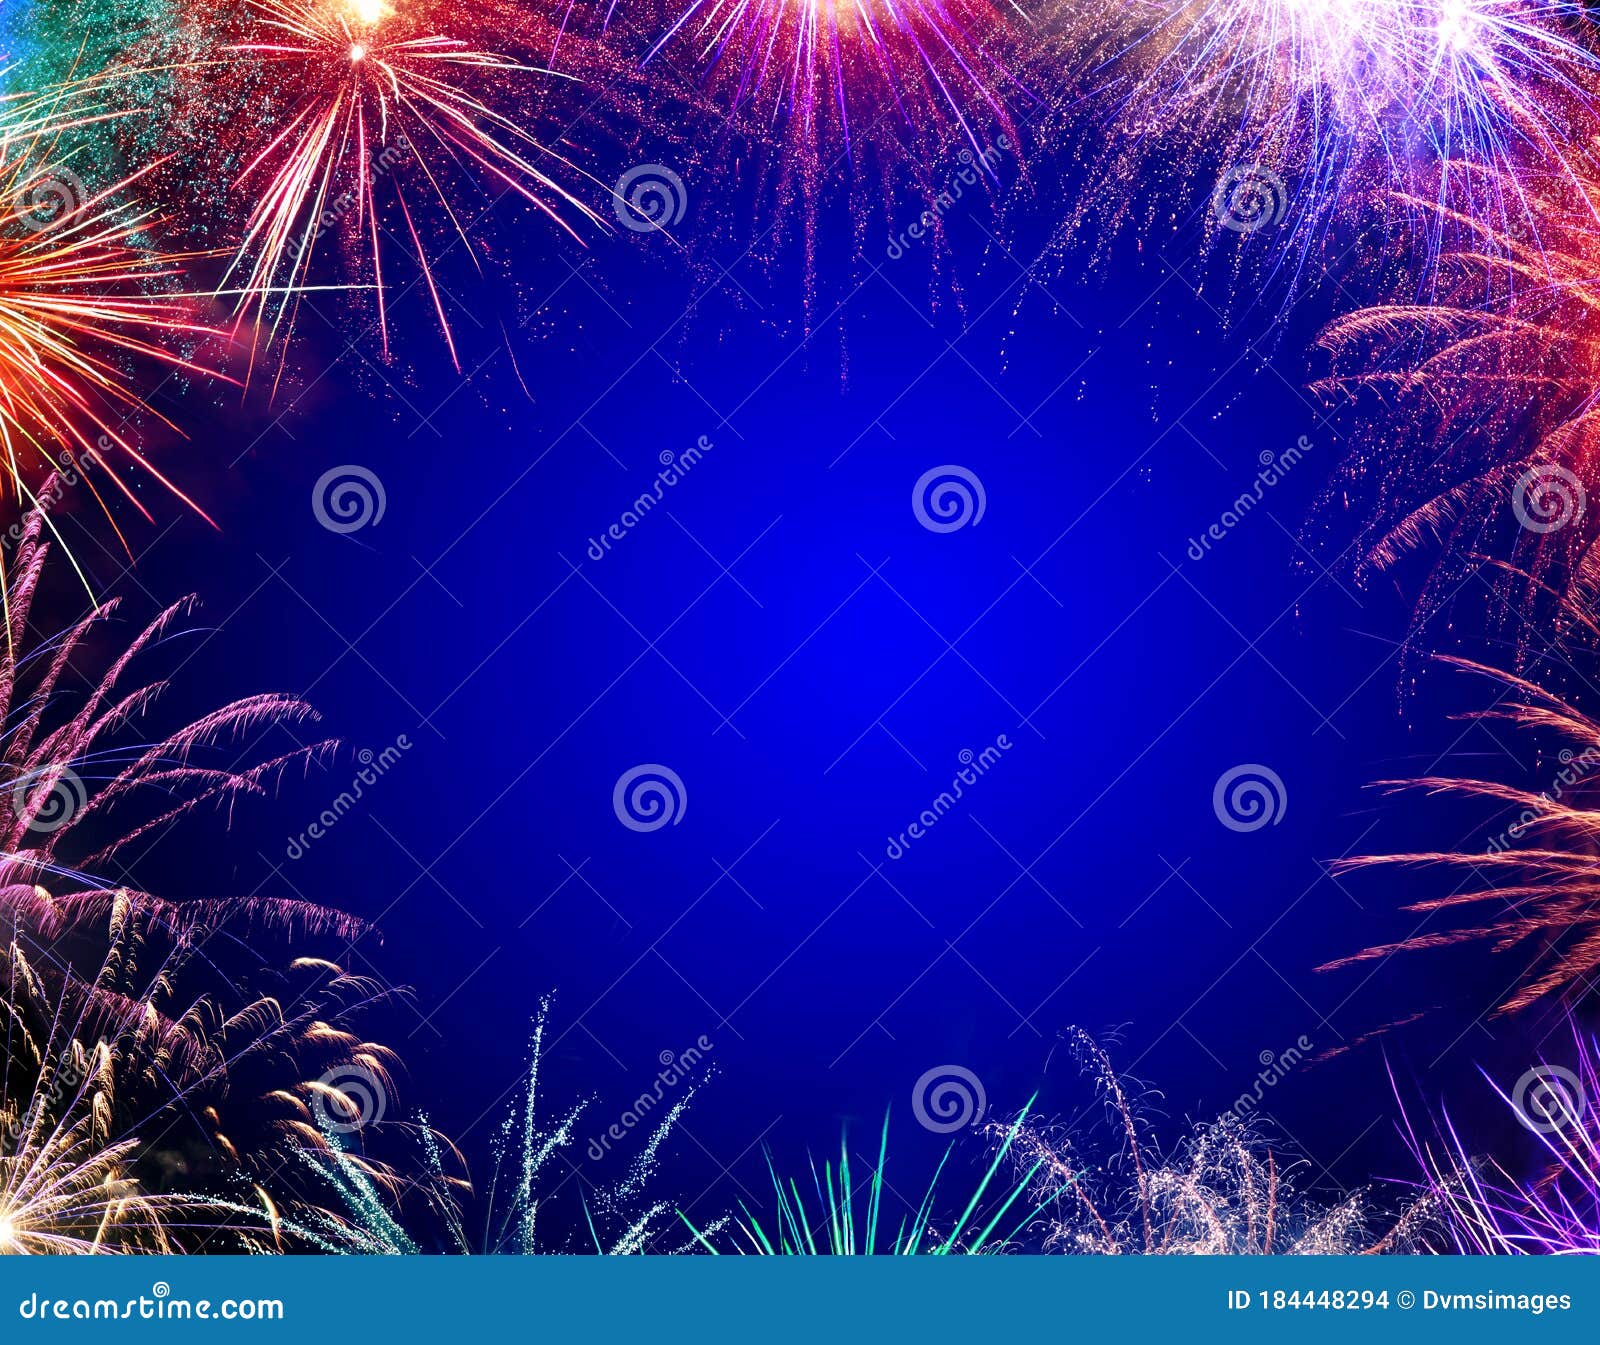 fireworks frame with blue background